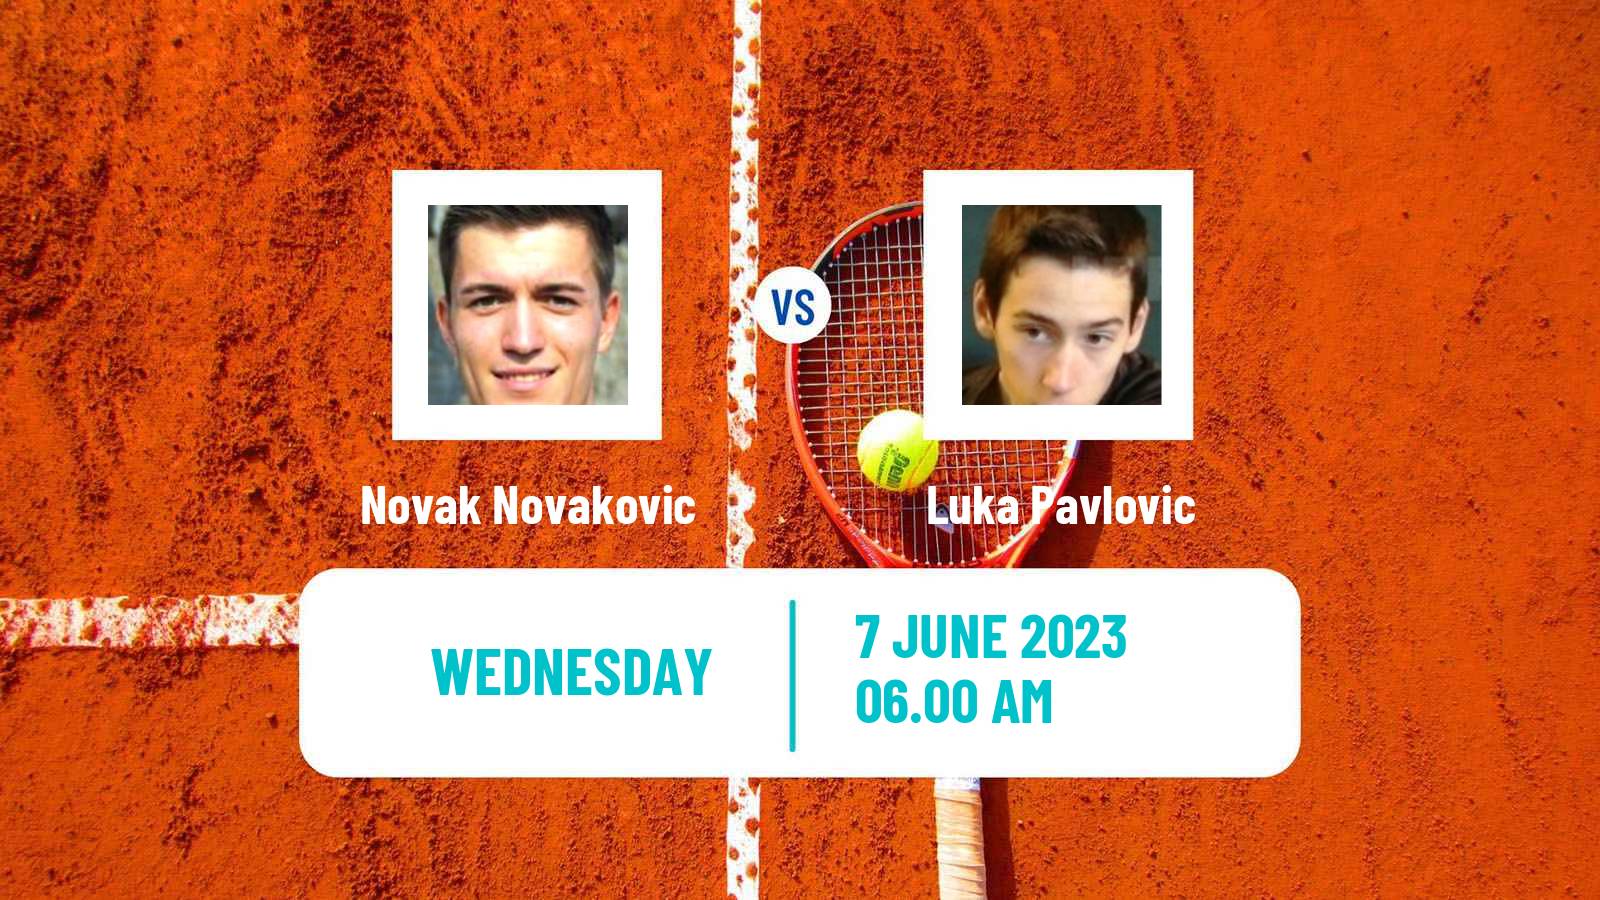 Tennis ITF M25 Kursumlijska Banja 3 Men Novak Novakovic - Luka Pavlovic